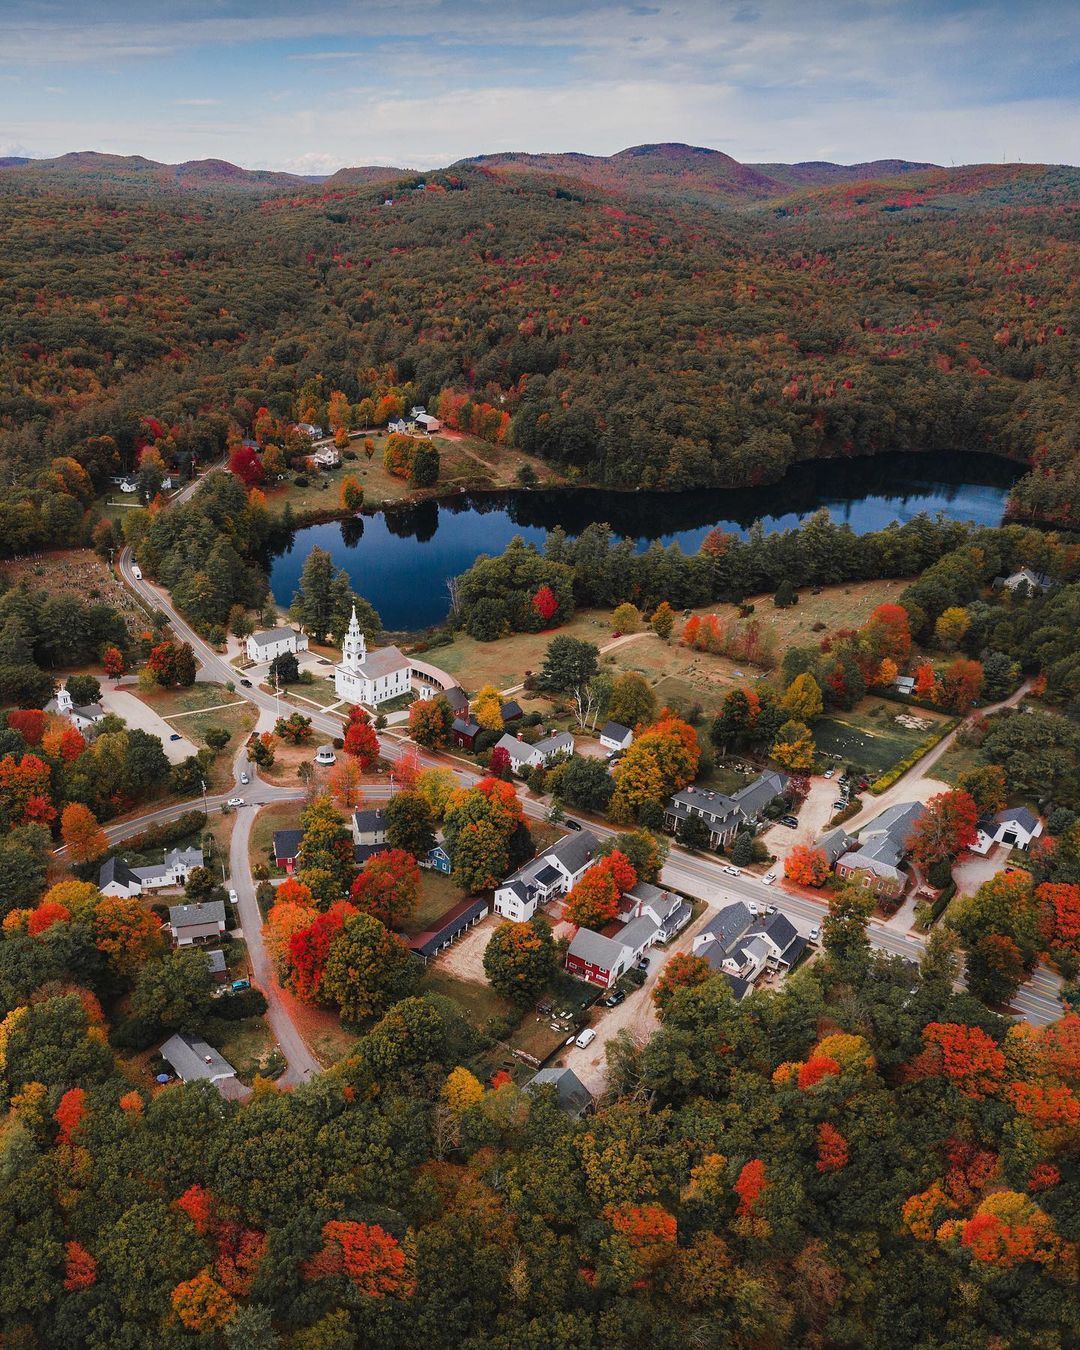 Drone Photo of Monadnock Region in New Hampshire. Photo by Instagram user @braybraywoowoo